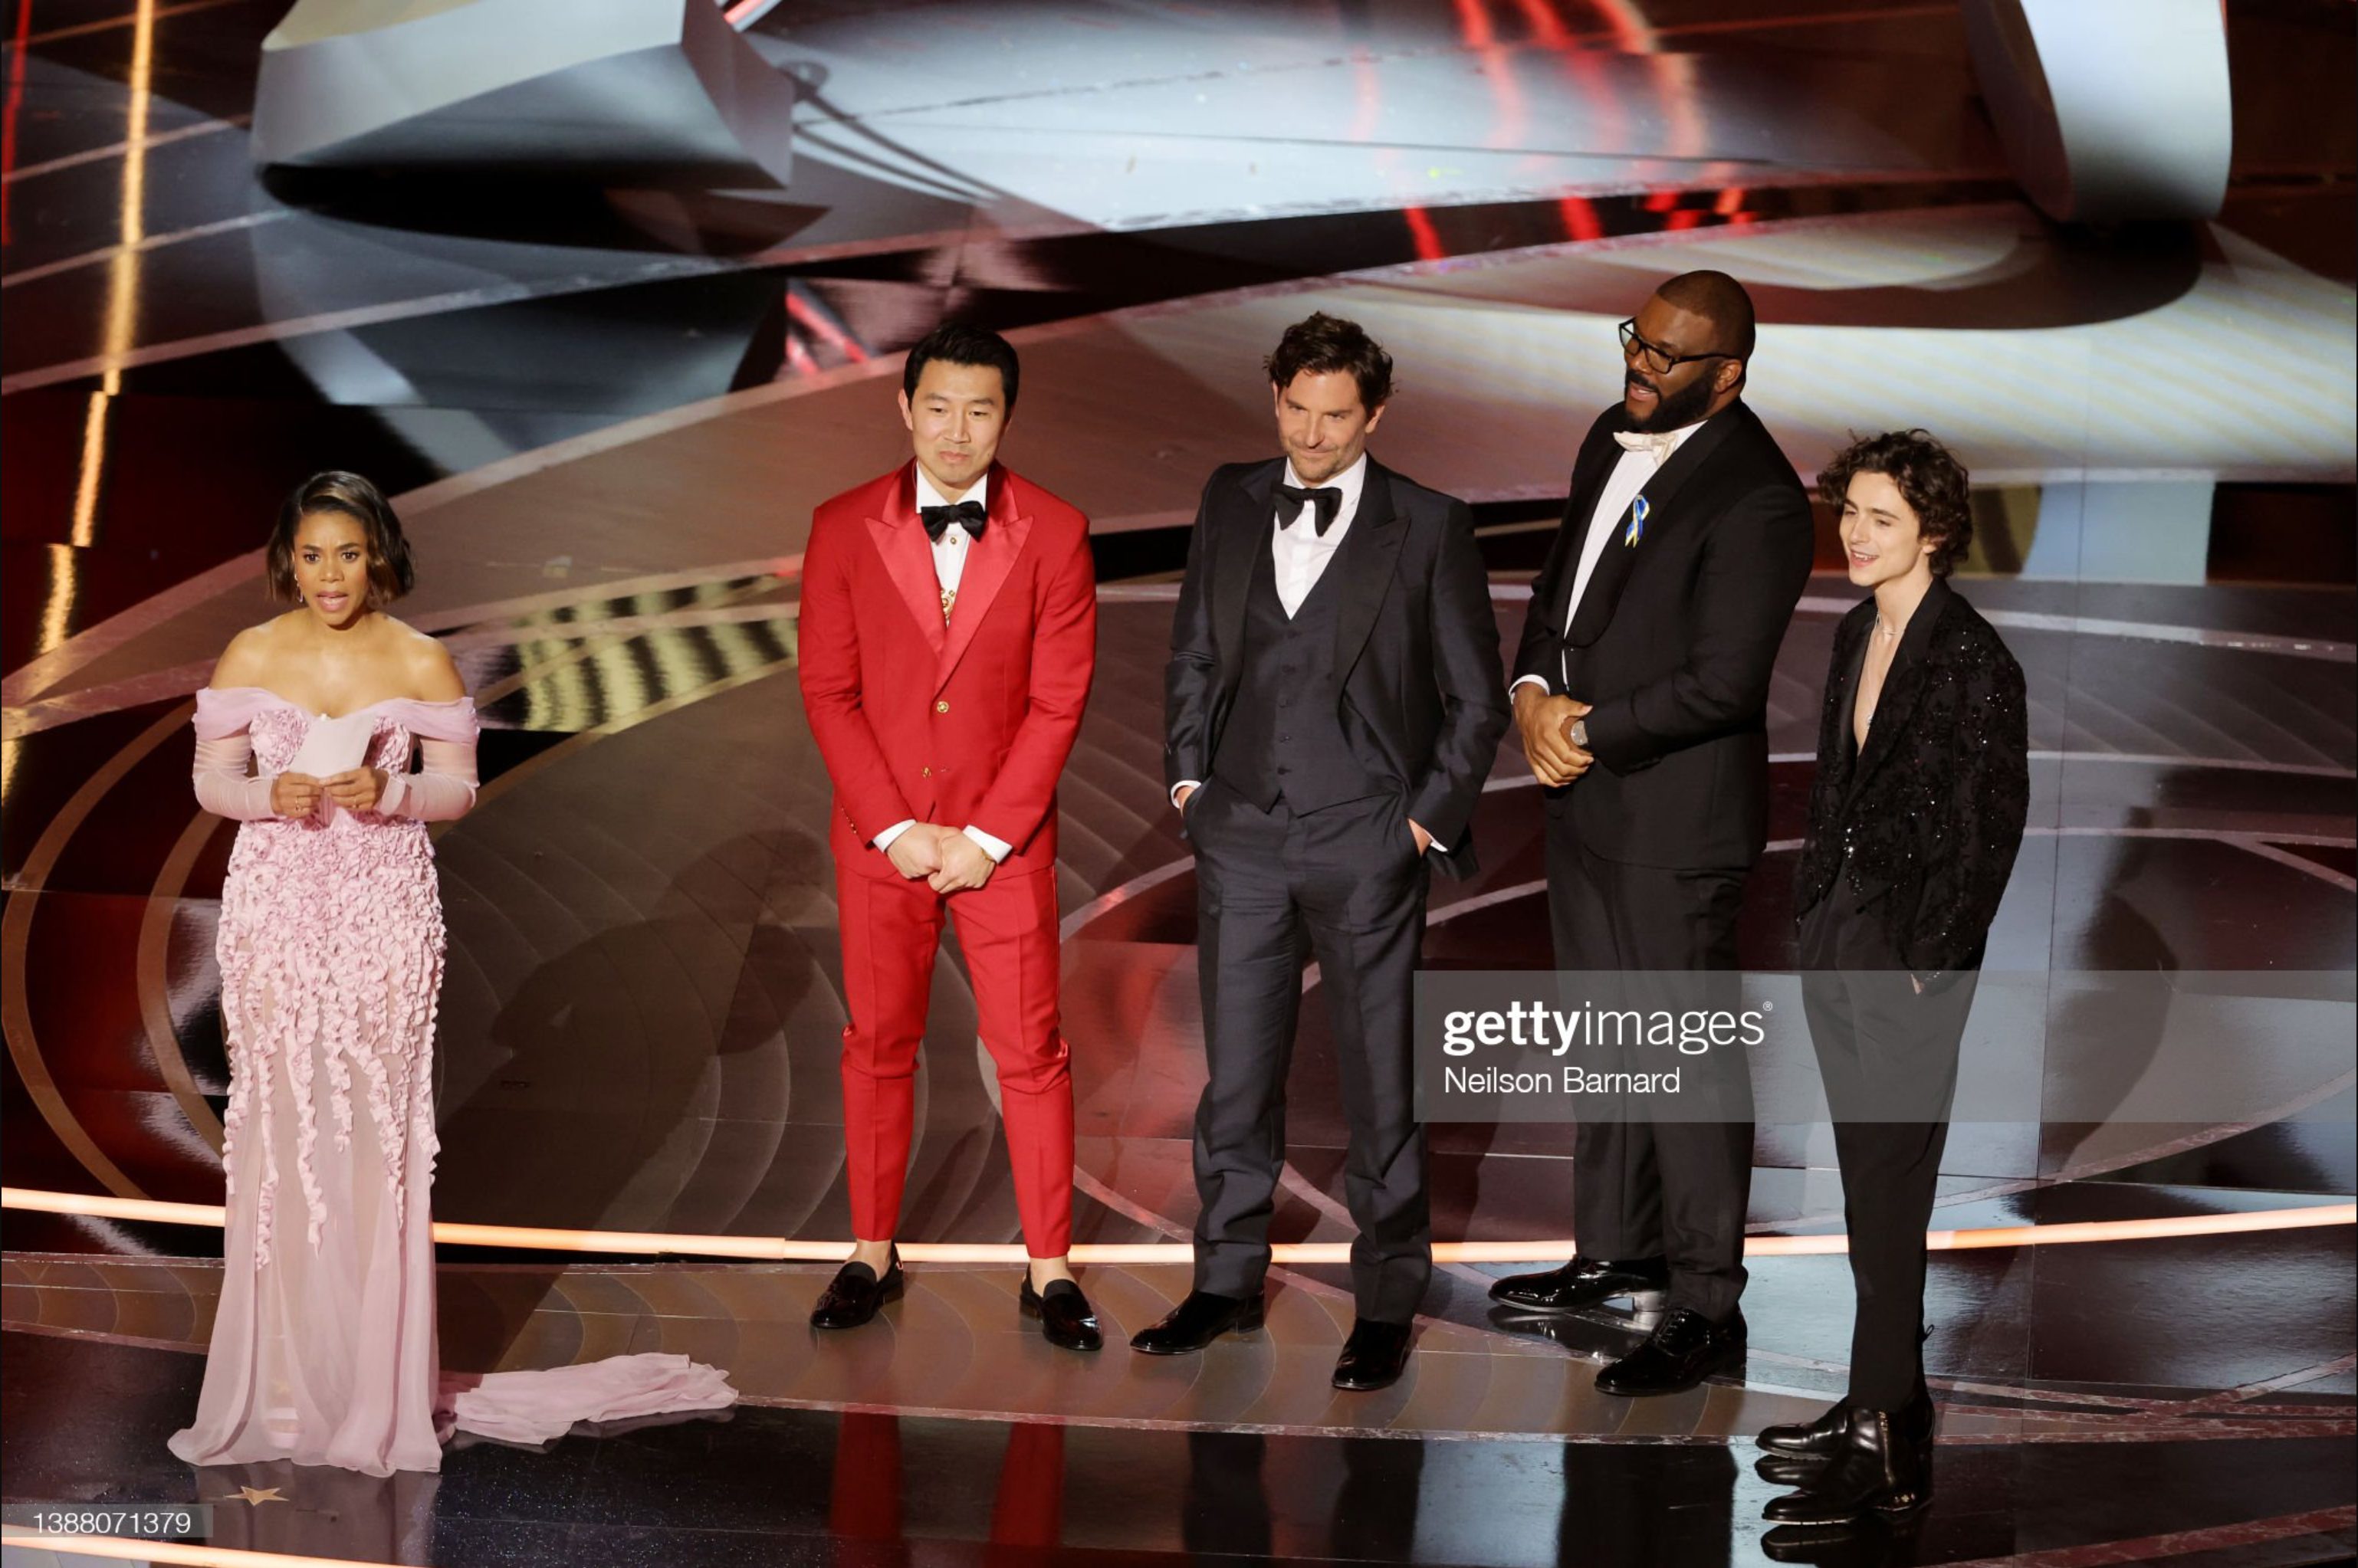 Simu Liu Height: How Tall is the Canadian Actor? - Hood MWR